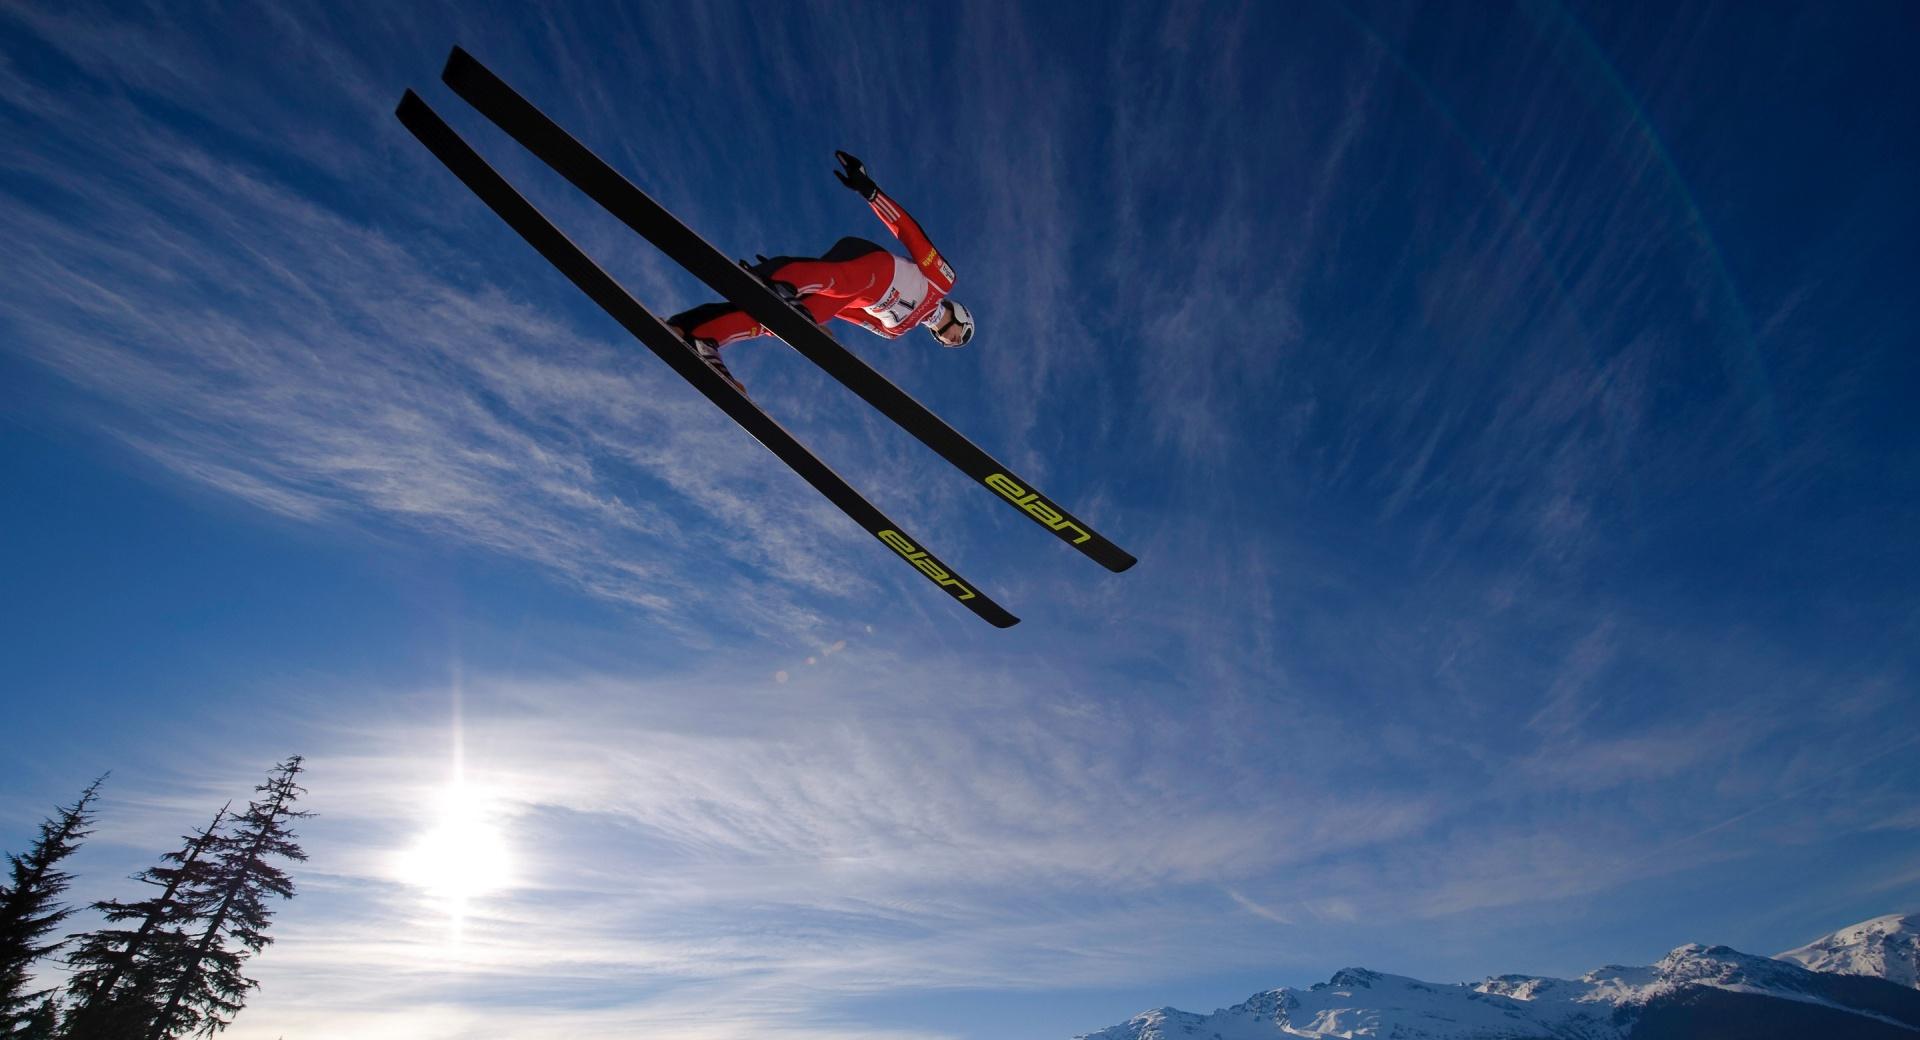 Skiing Jump at 1024 x 1024 iPad size wallpapers HD quality